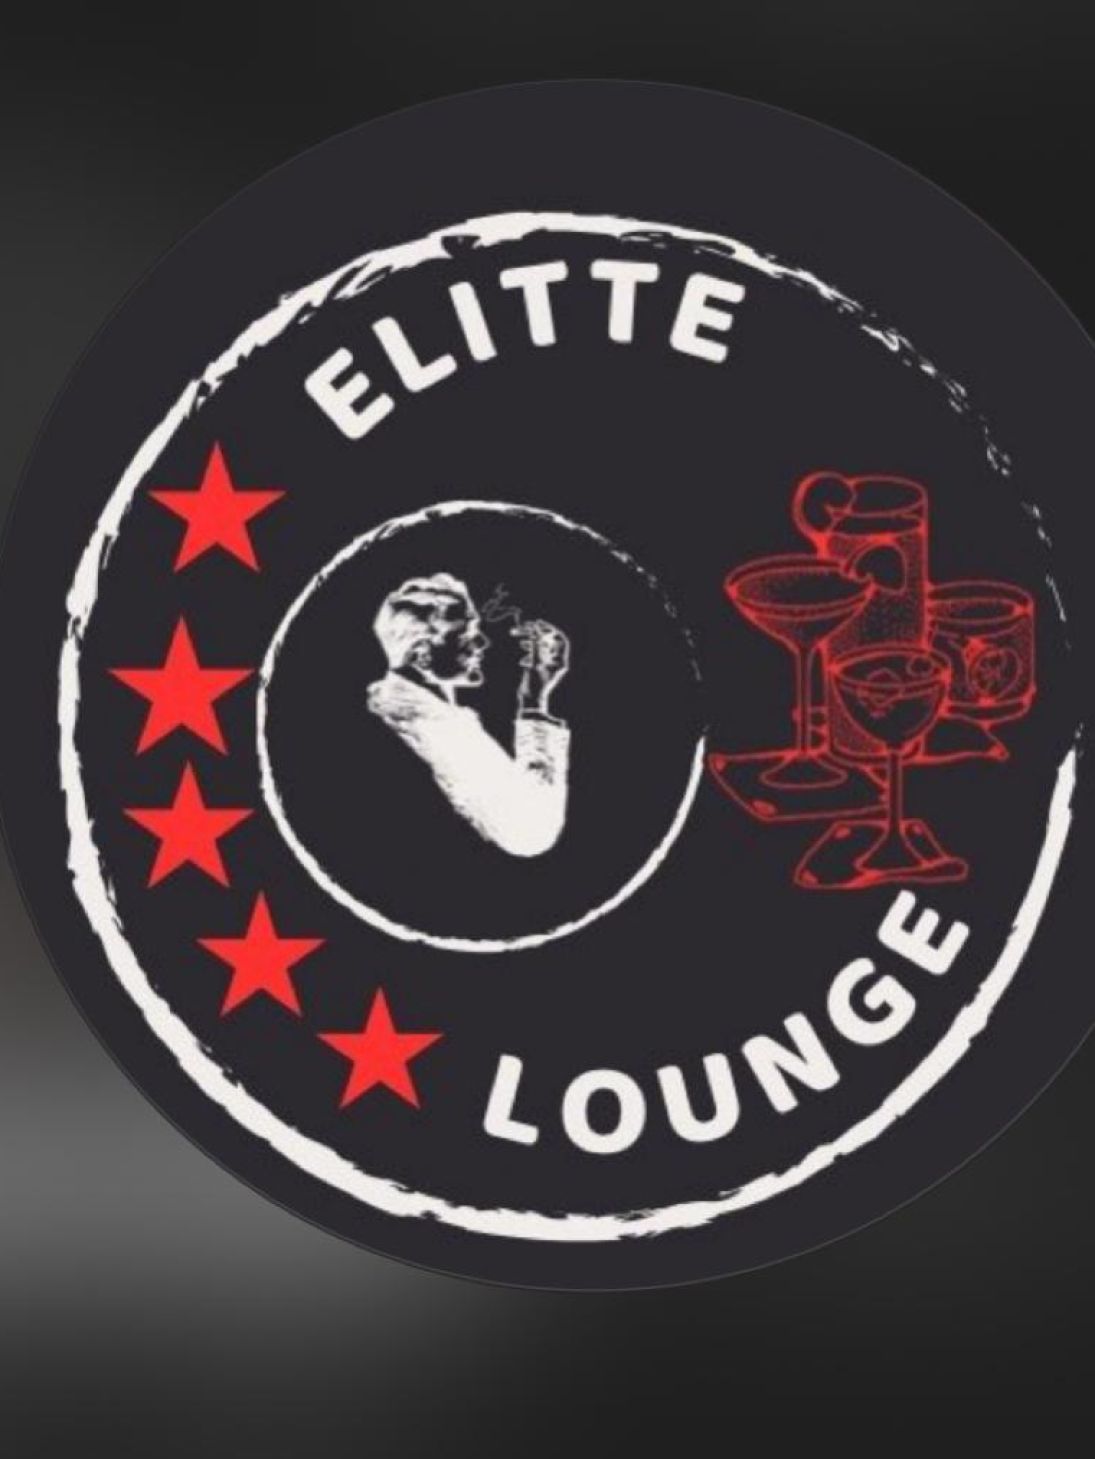 Elitte Lounge